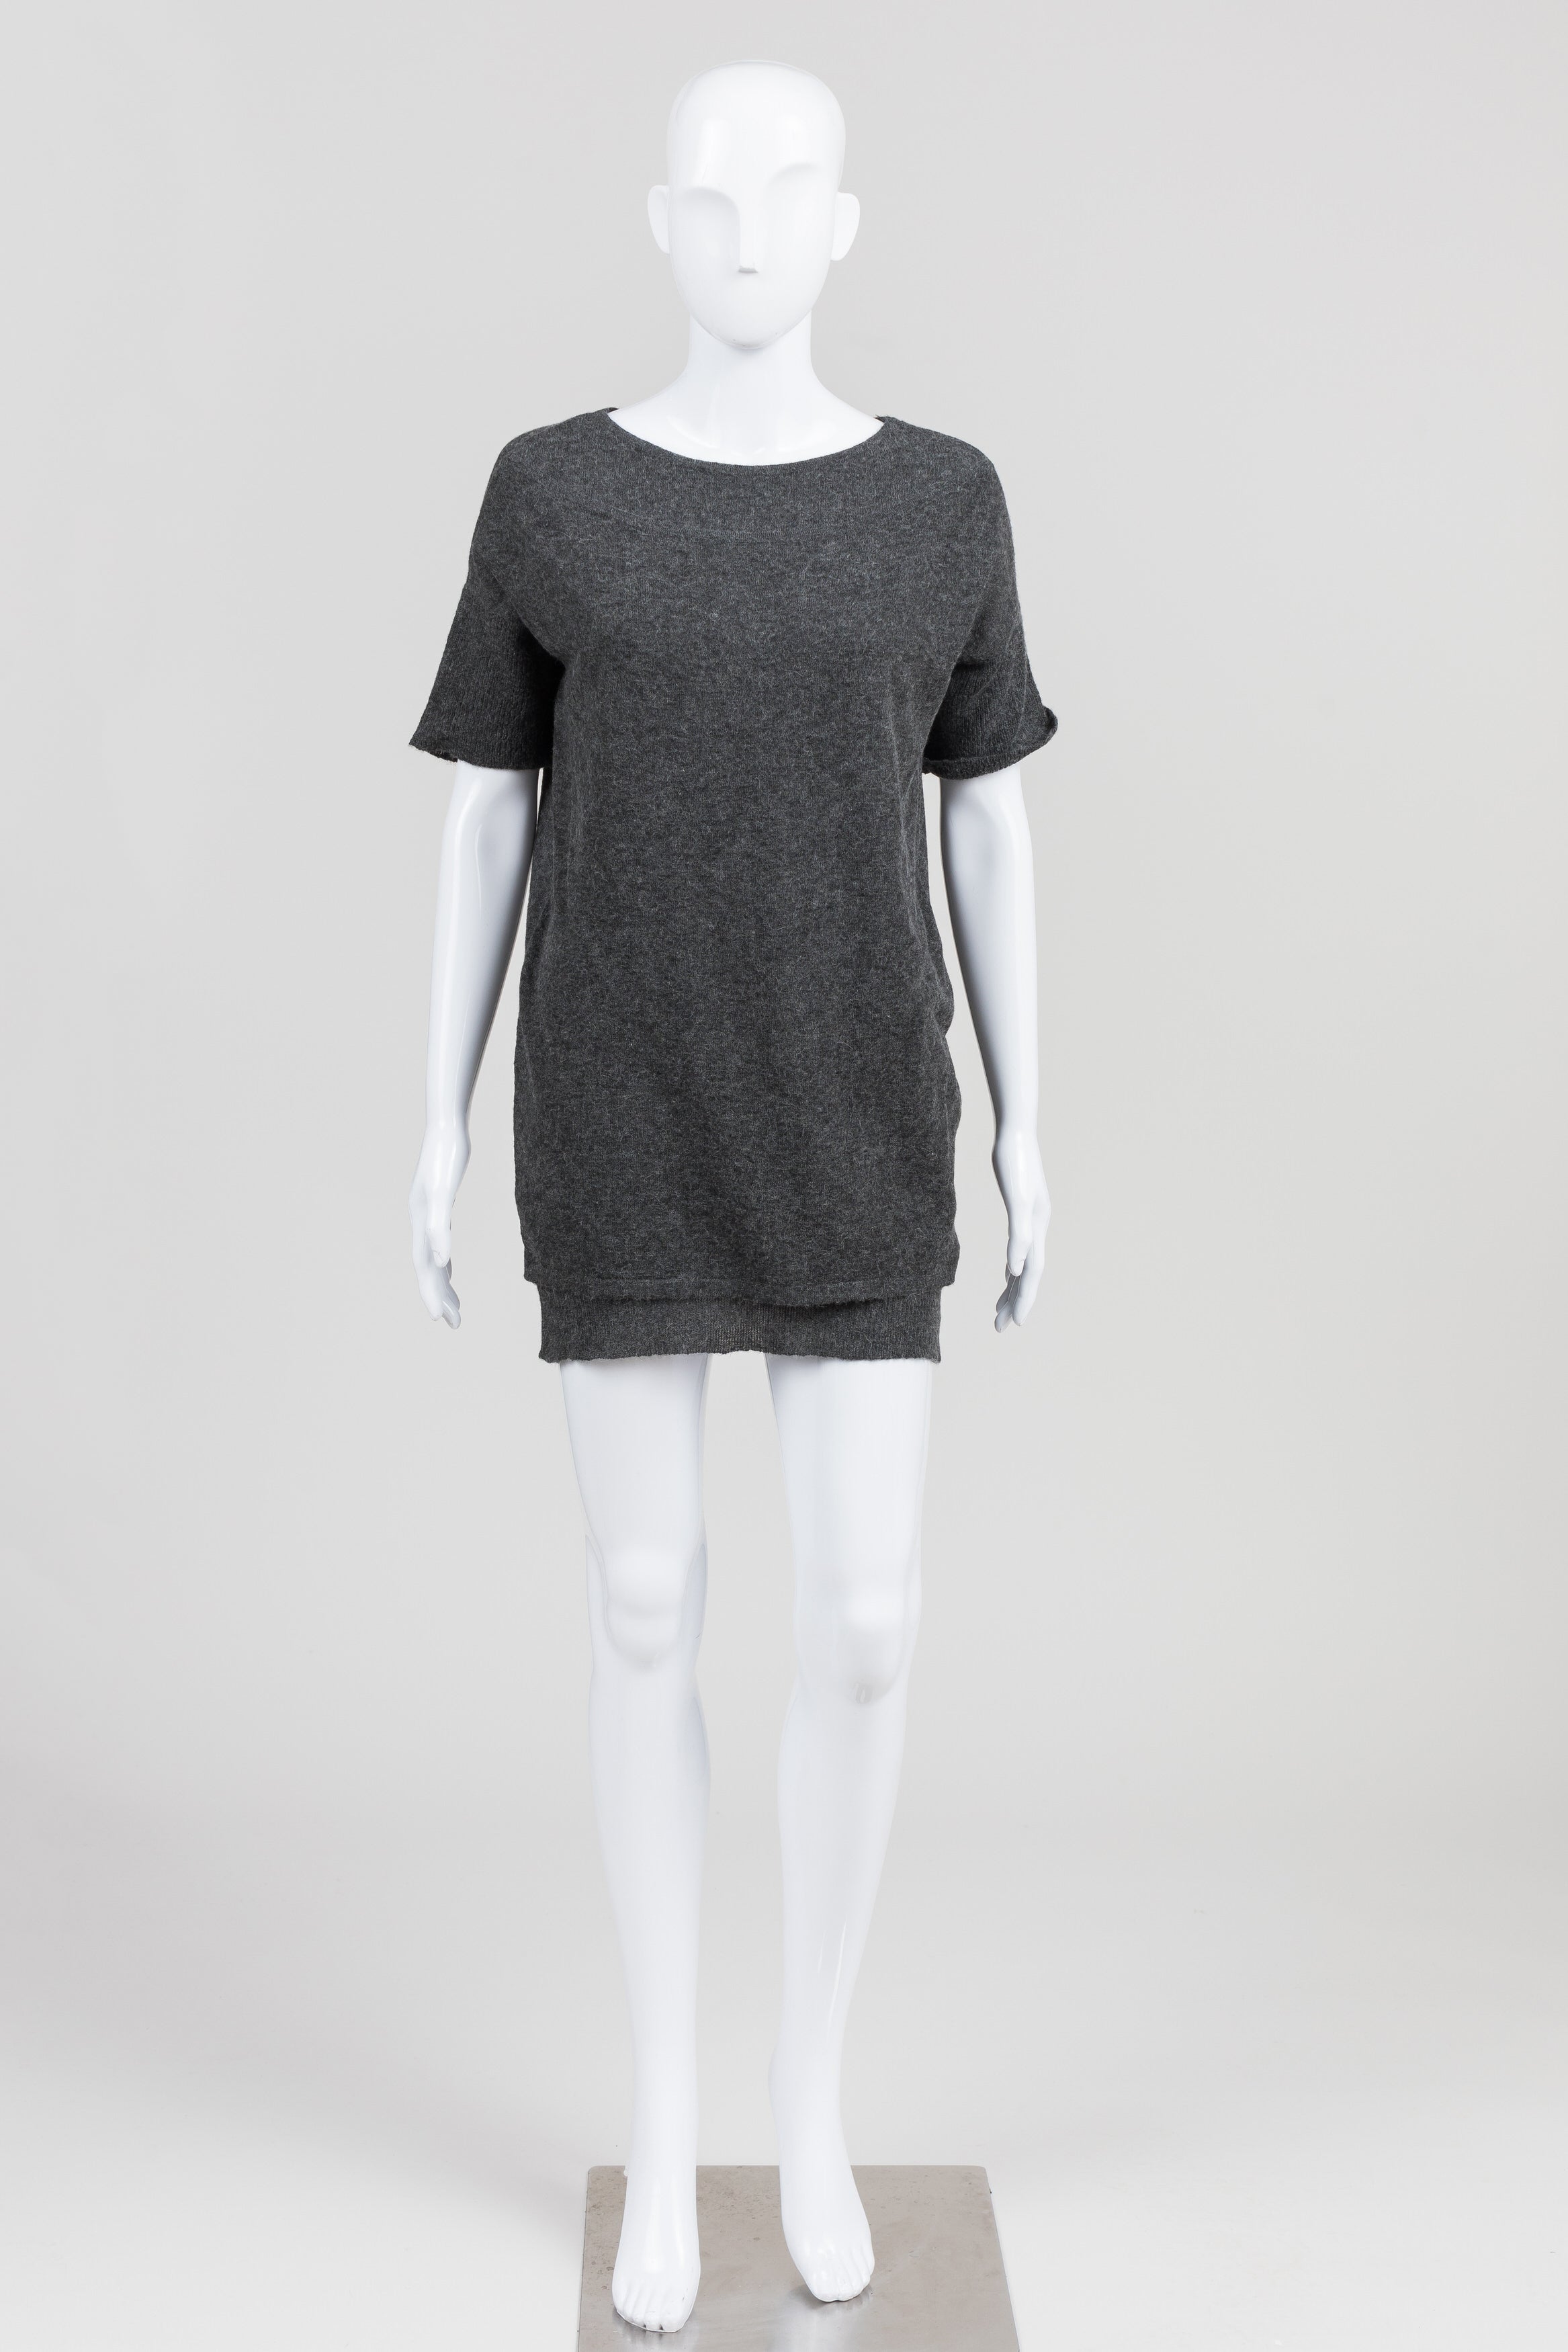 Sarah Pacini Charcoal Short Sleeve Layered Look Knit Tunic (O/S)